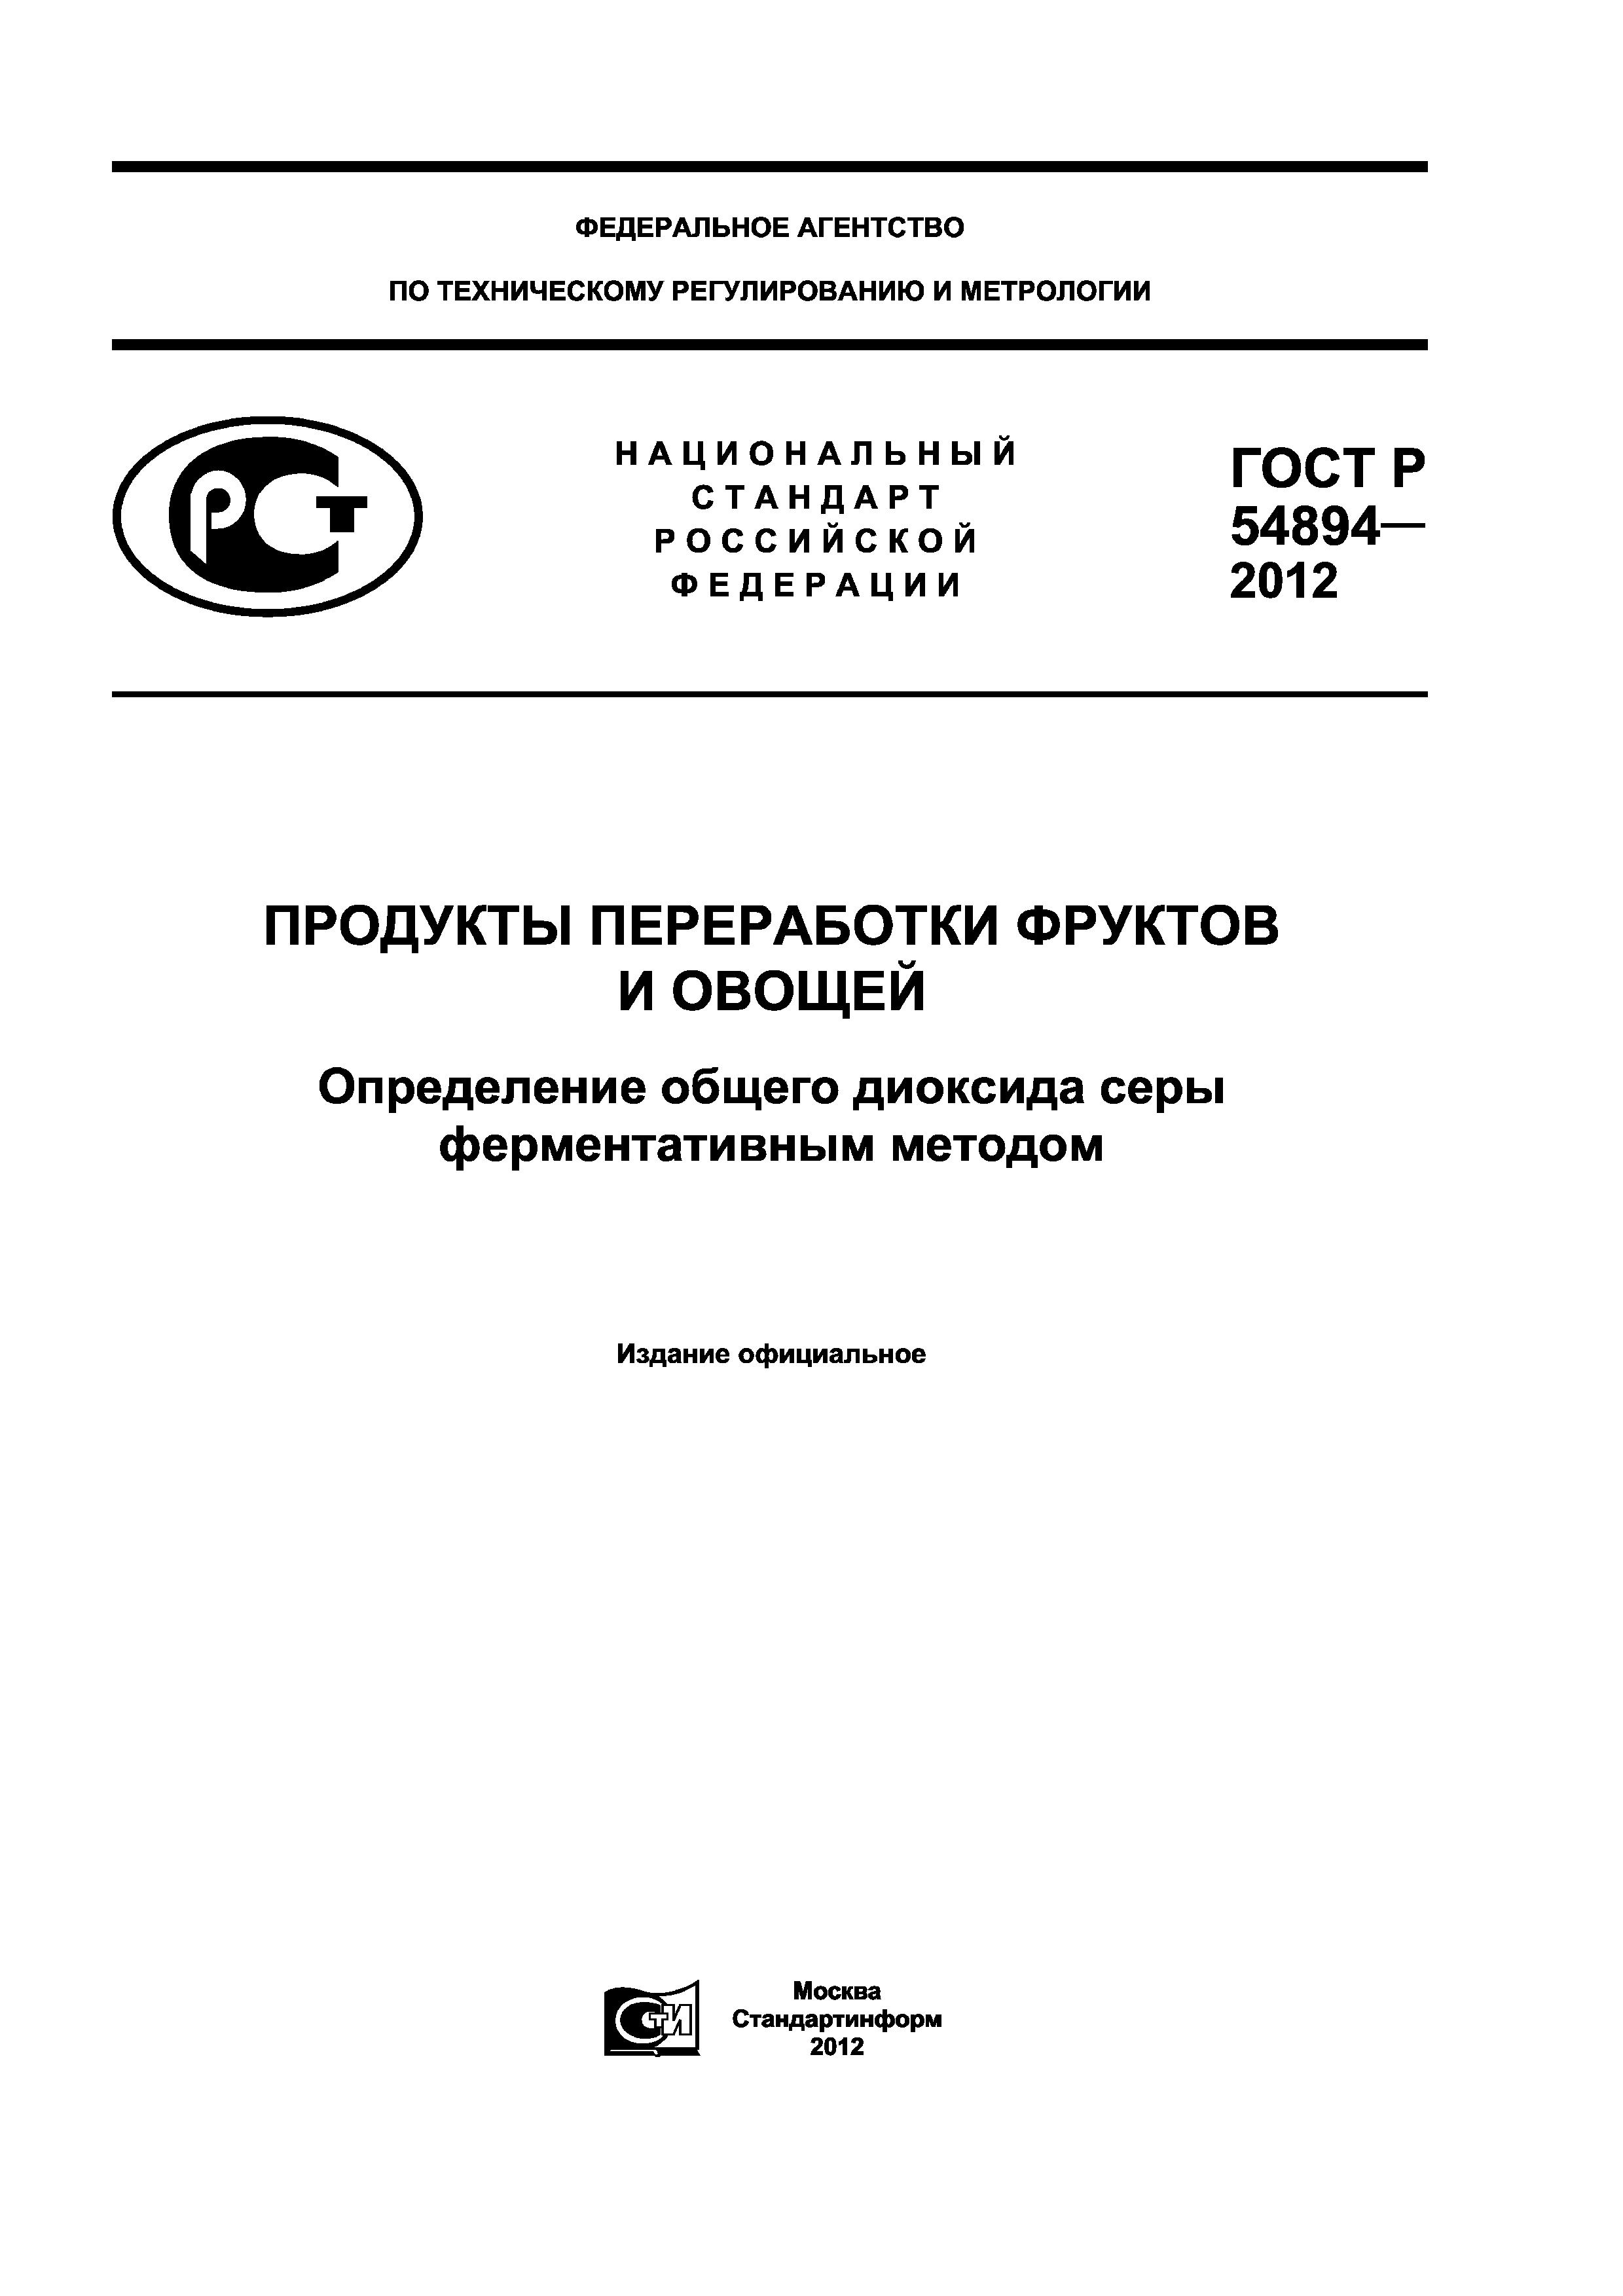 ГОСТ Р 54894-2012